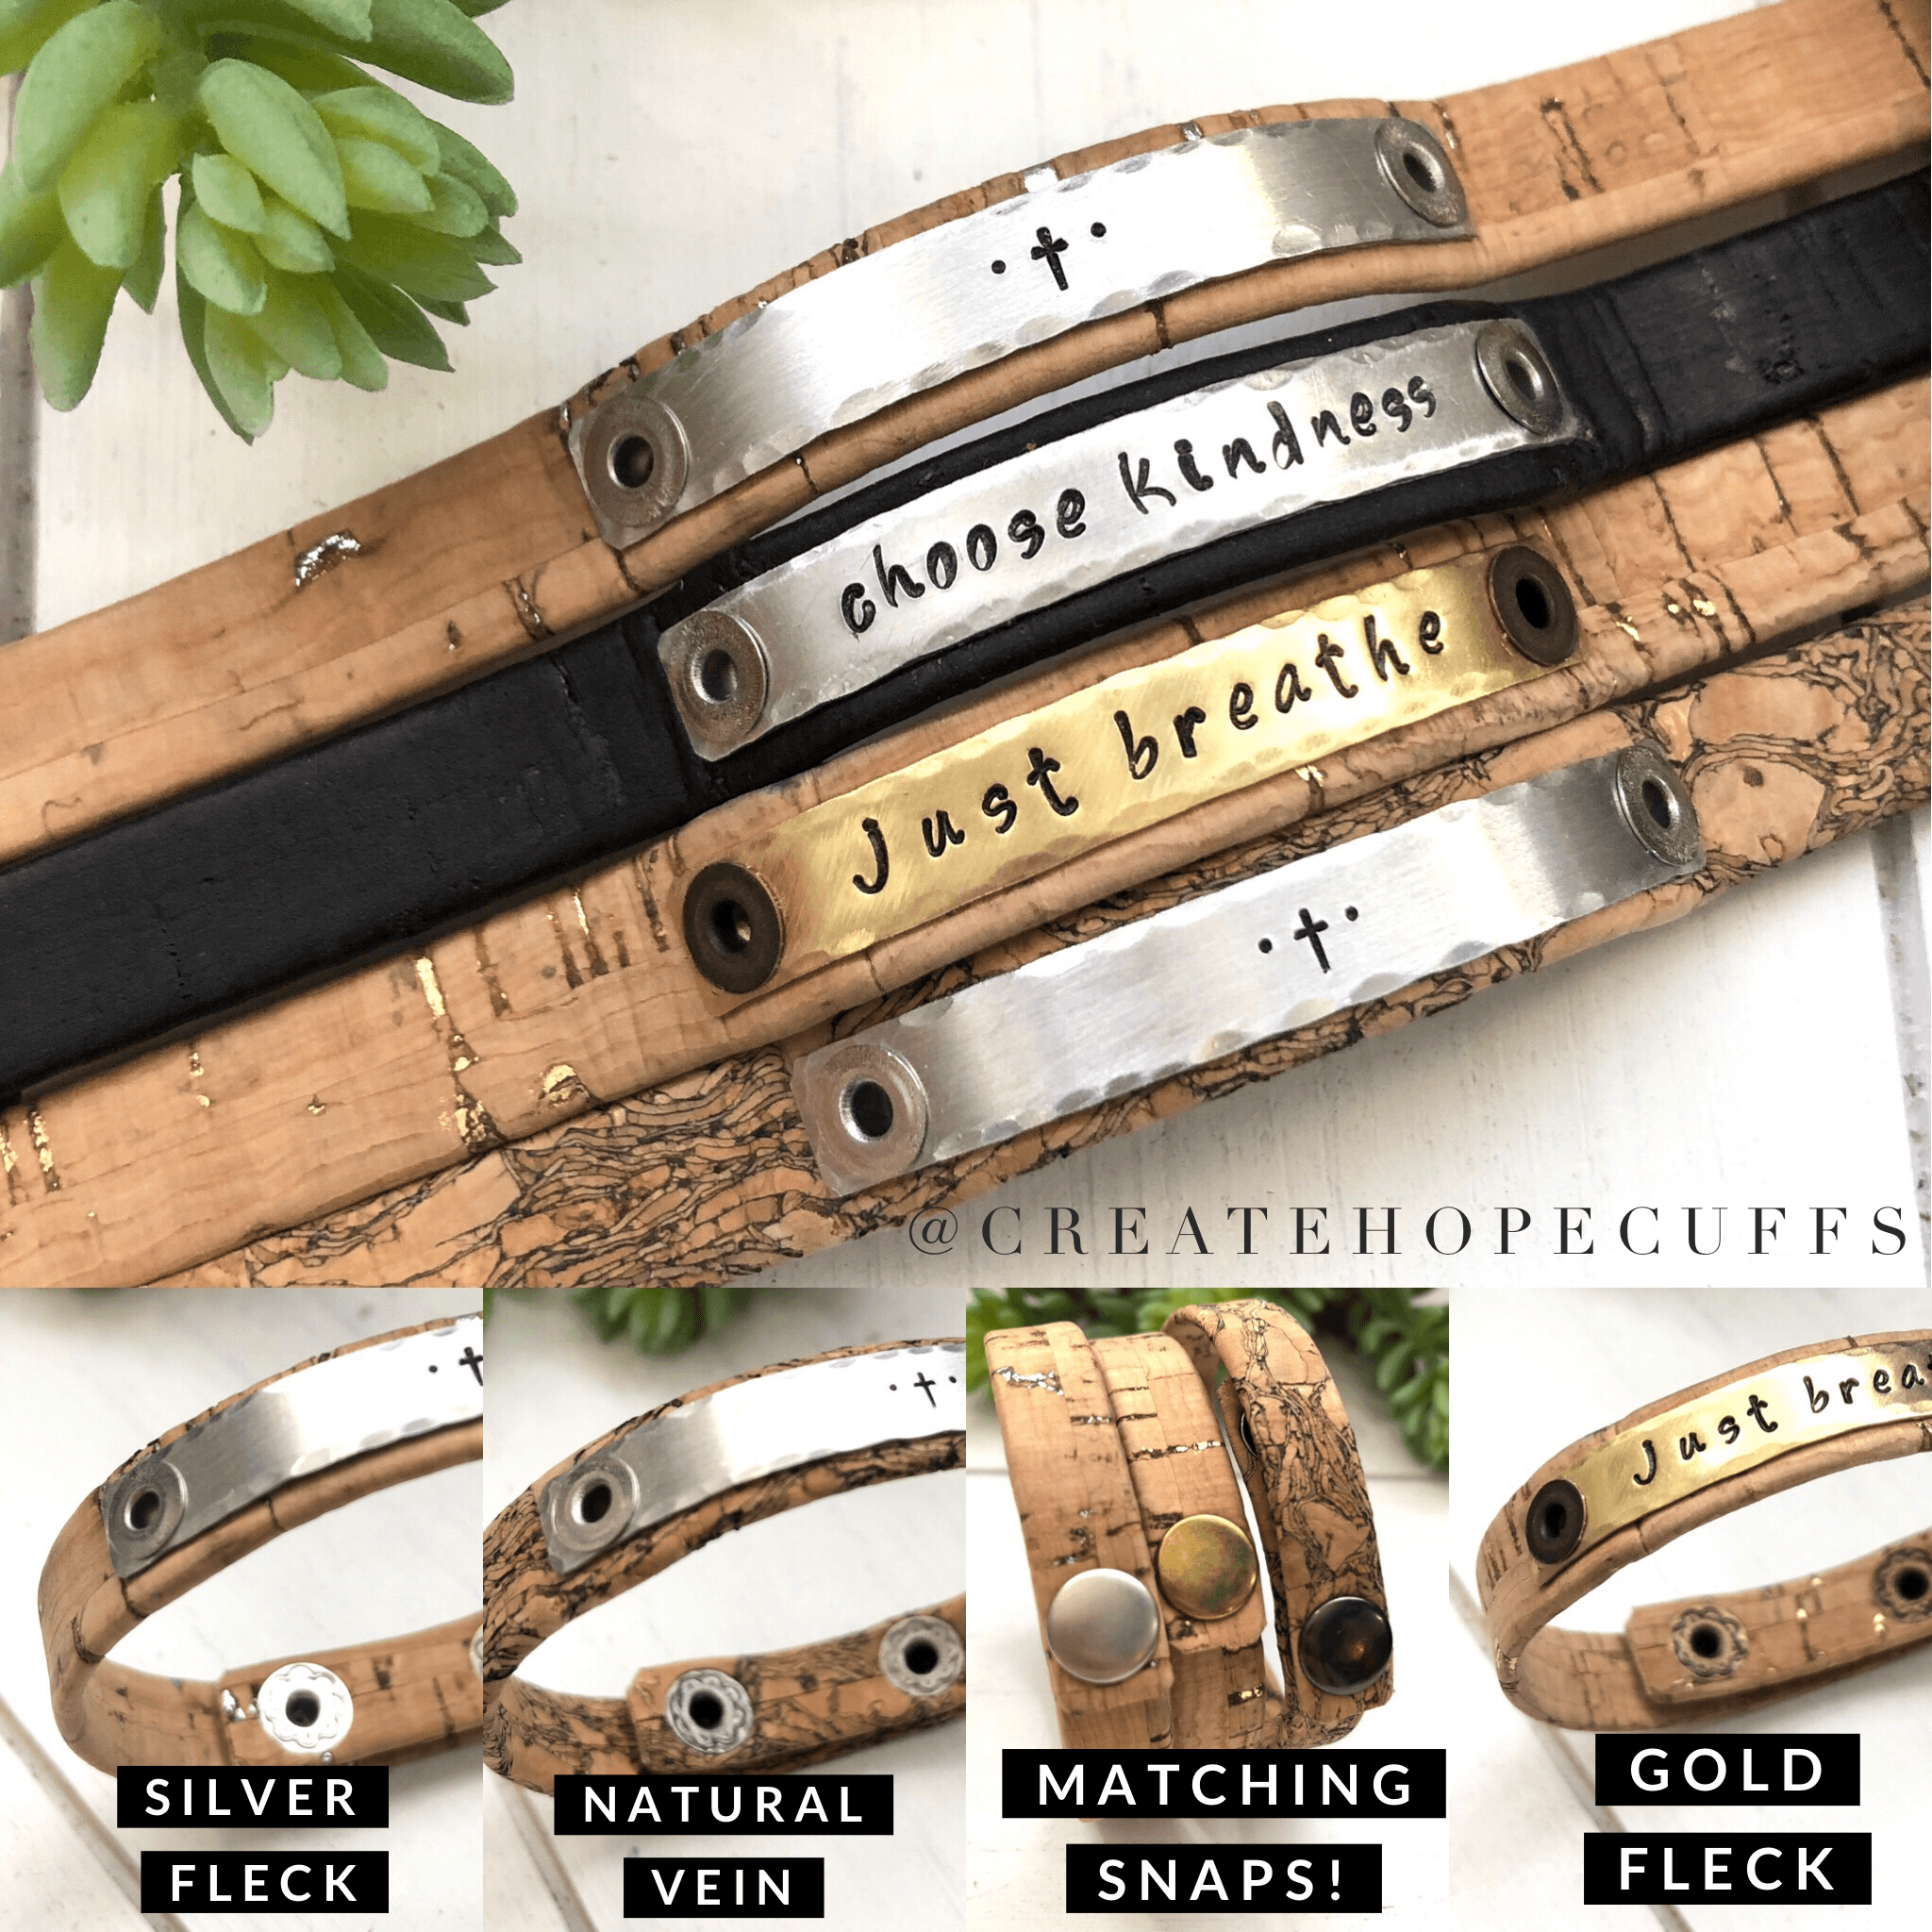 (Wholesale) CORK Collection Skinny Bracelet, Vegan, ECO friendly Cork Fabric, 4 designs, adjustable Skinny Bracelets Create Hope Cuffs 